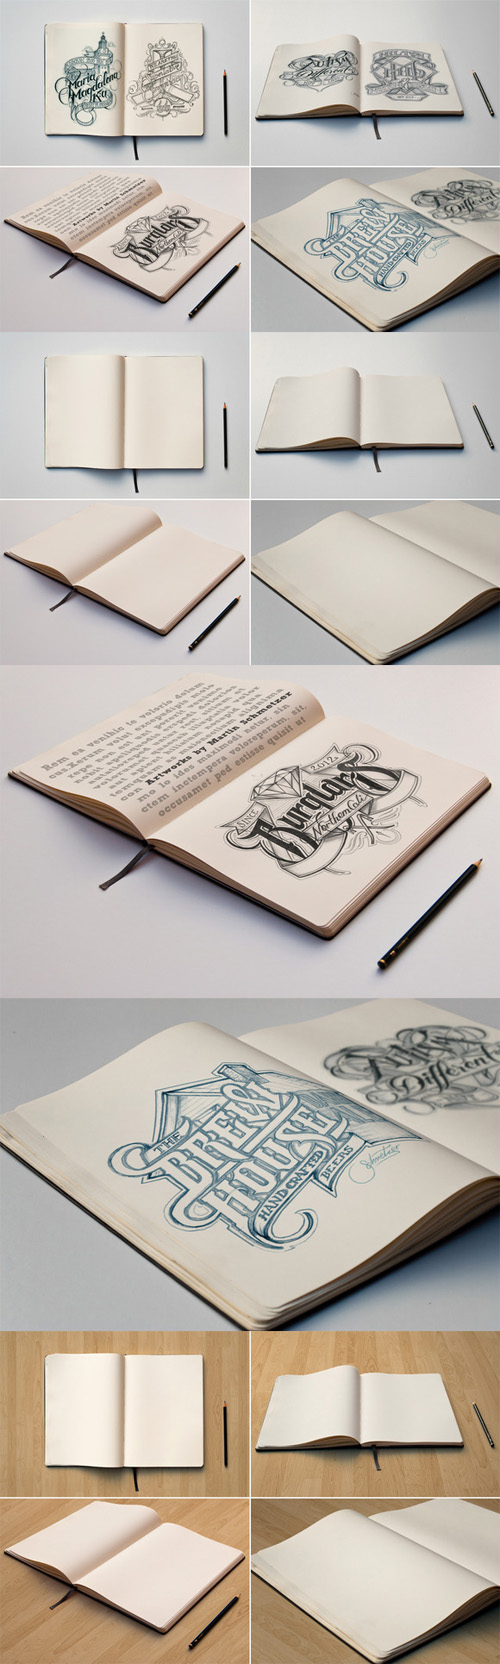 CreativeMarket - Sketch Book Mockups 14525